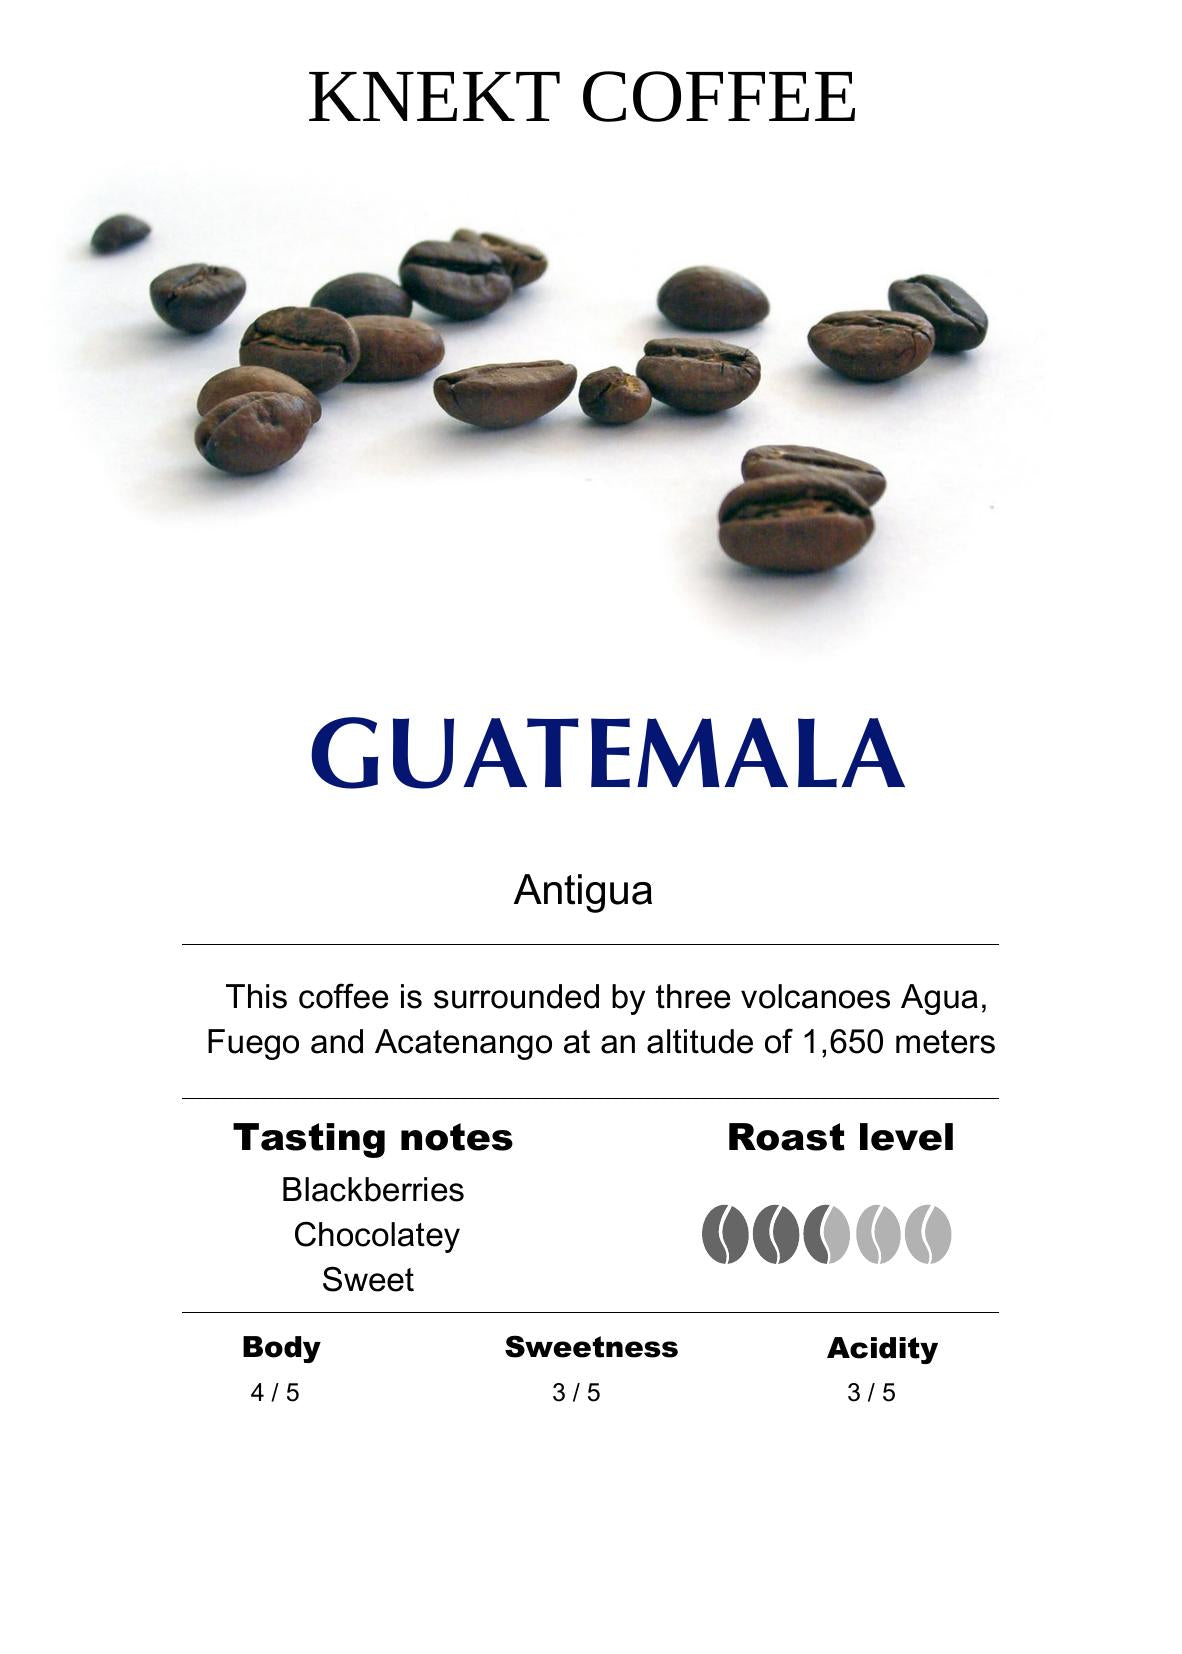 GUATEMALA - KNEKT COFFEE